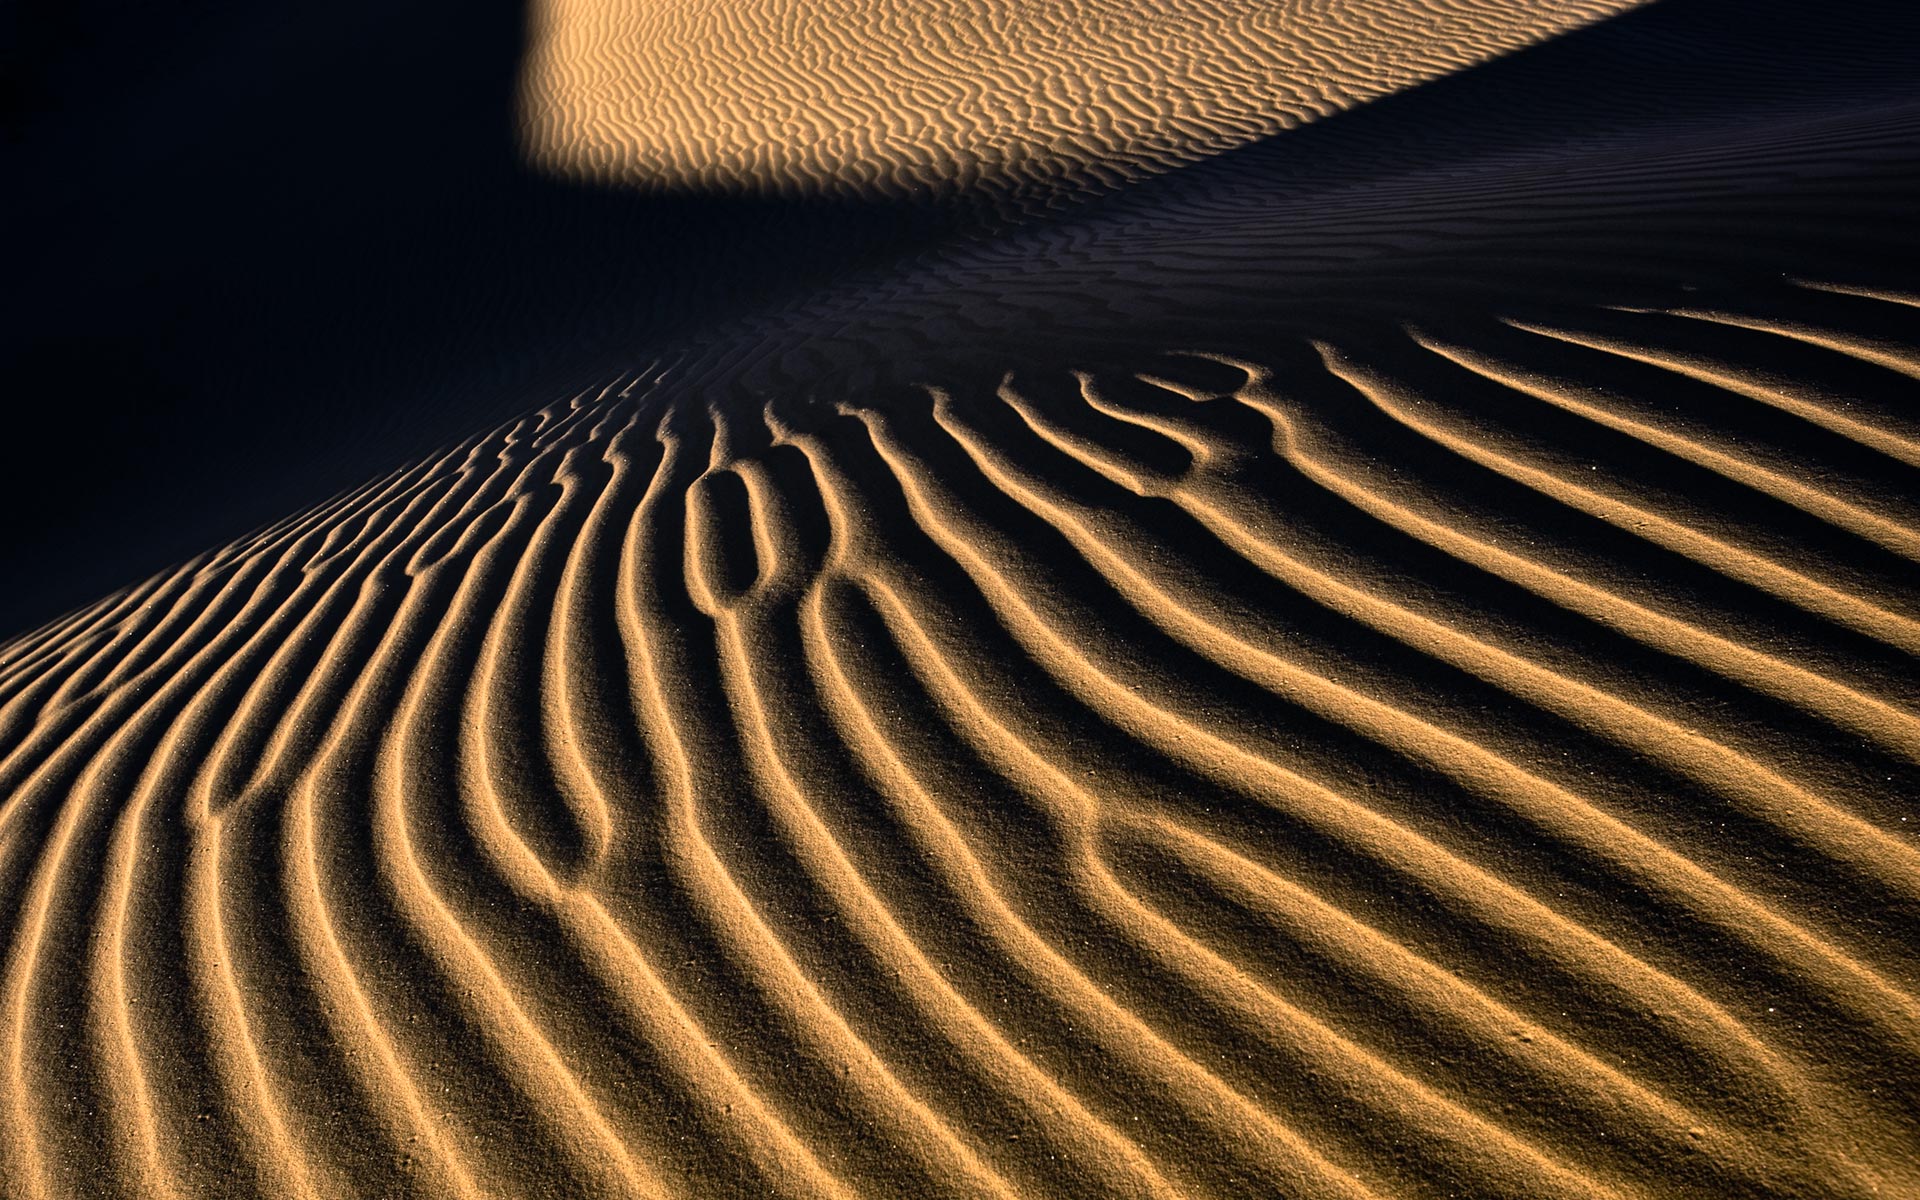 Eureka Sand Dunes, Death Valley